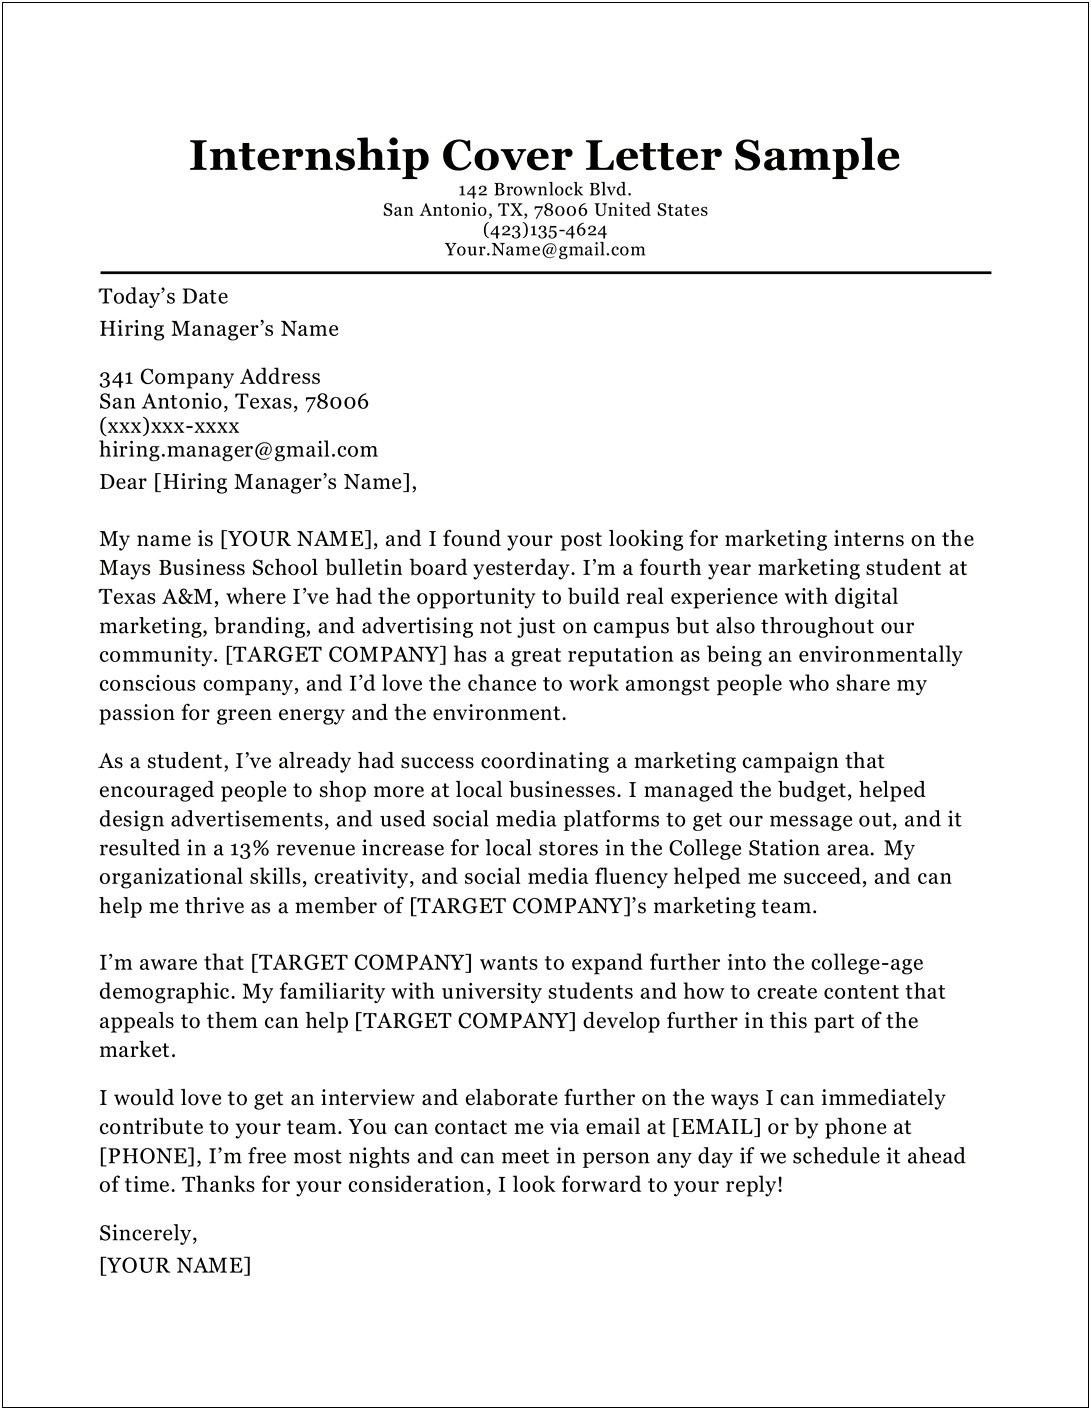 Sample Resume And Cover Letter For Internship